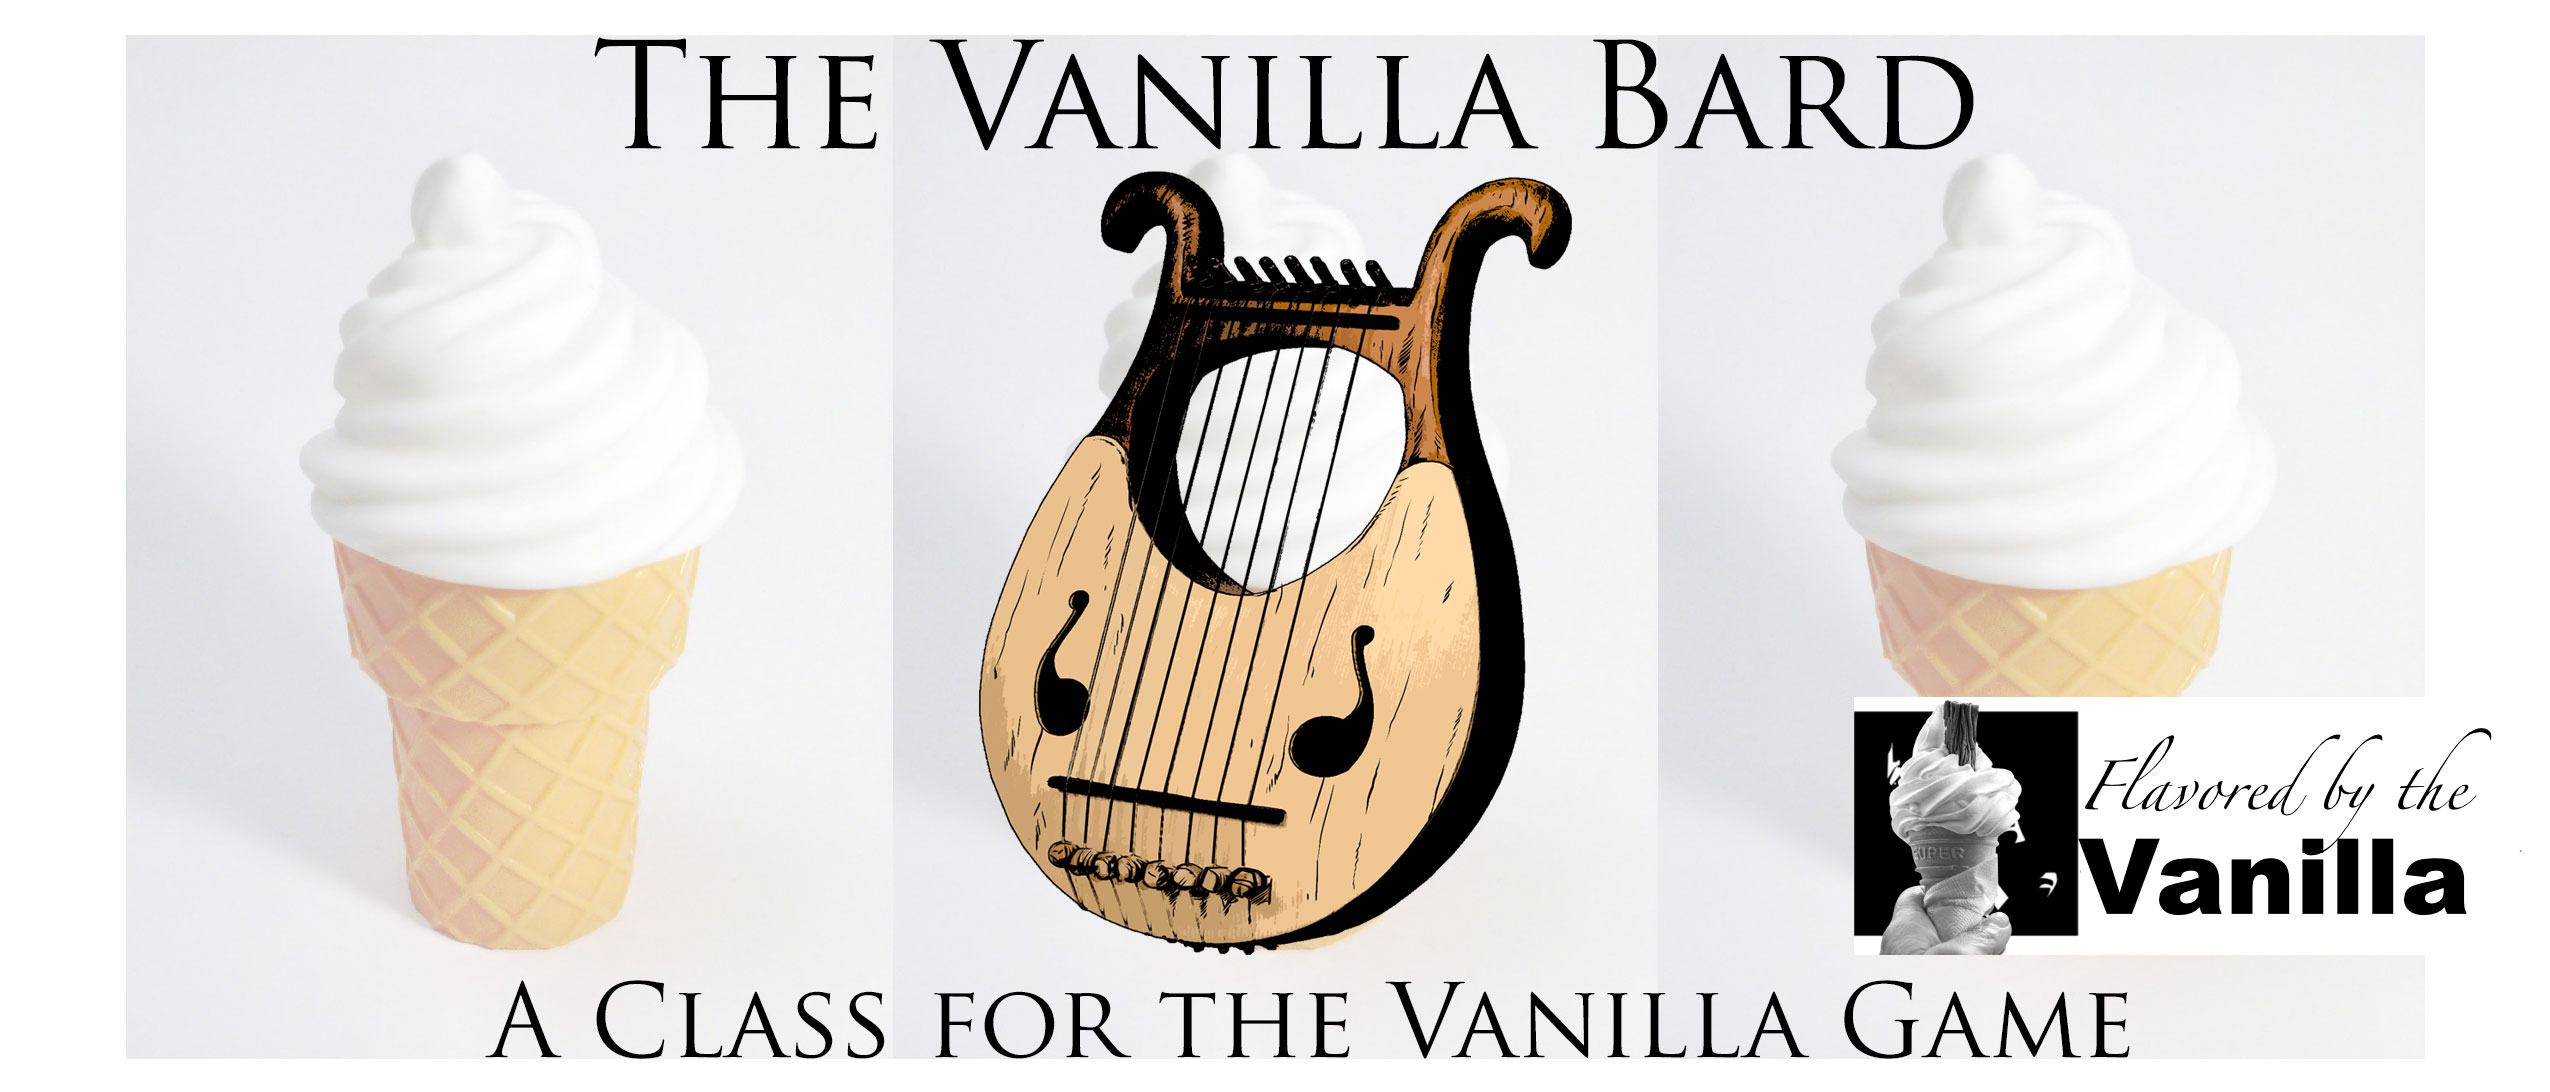 The Vanilla Bard